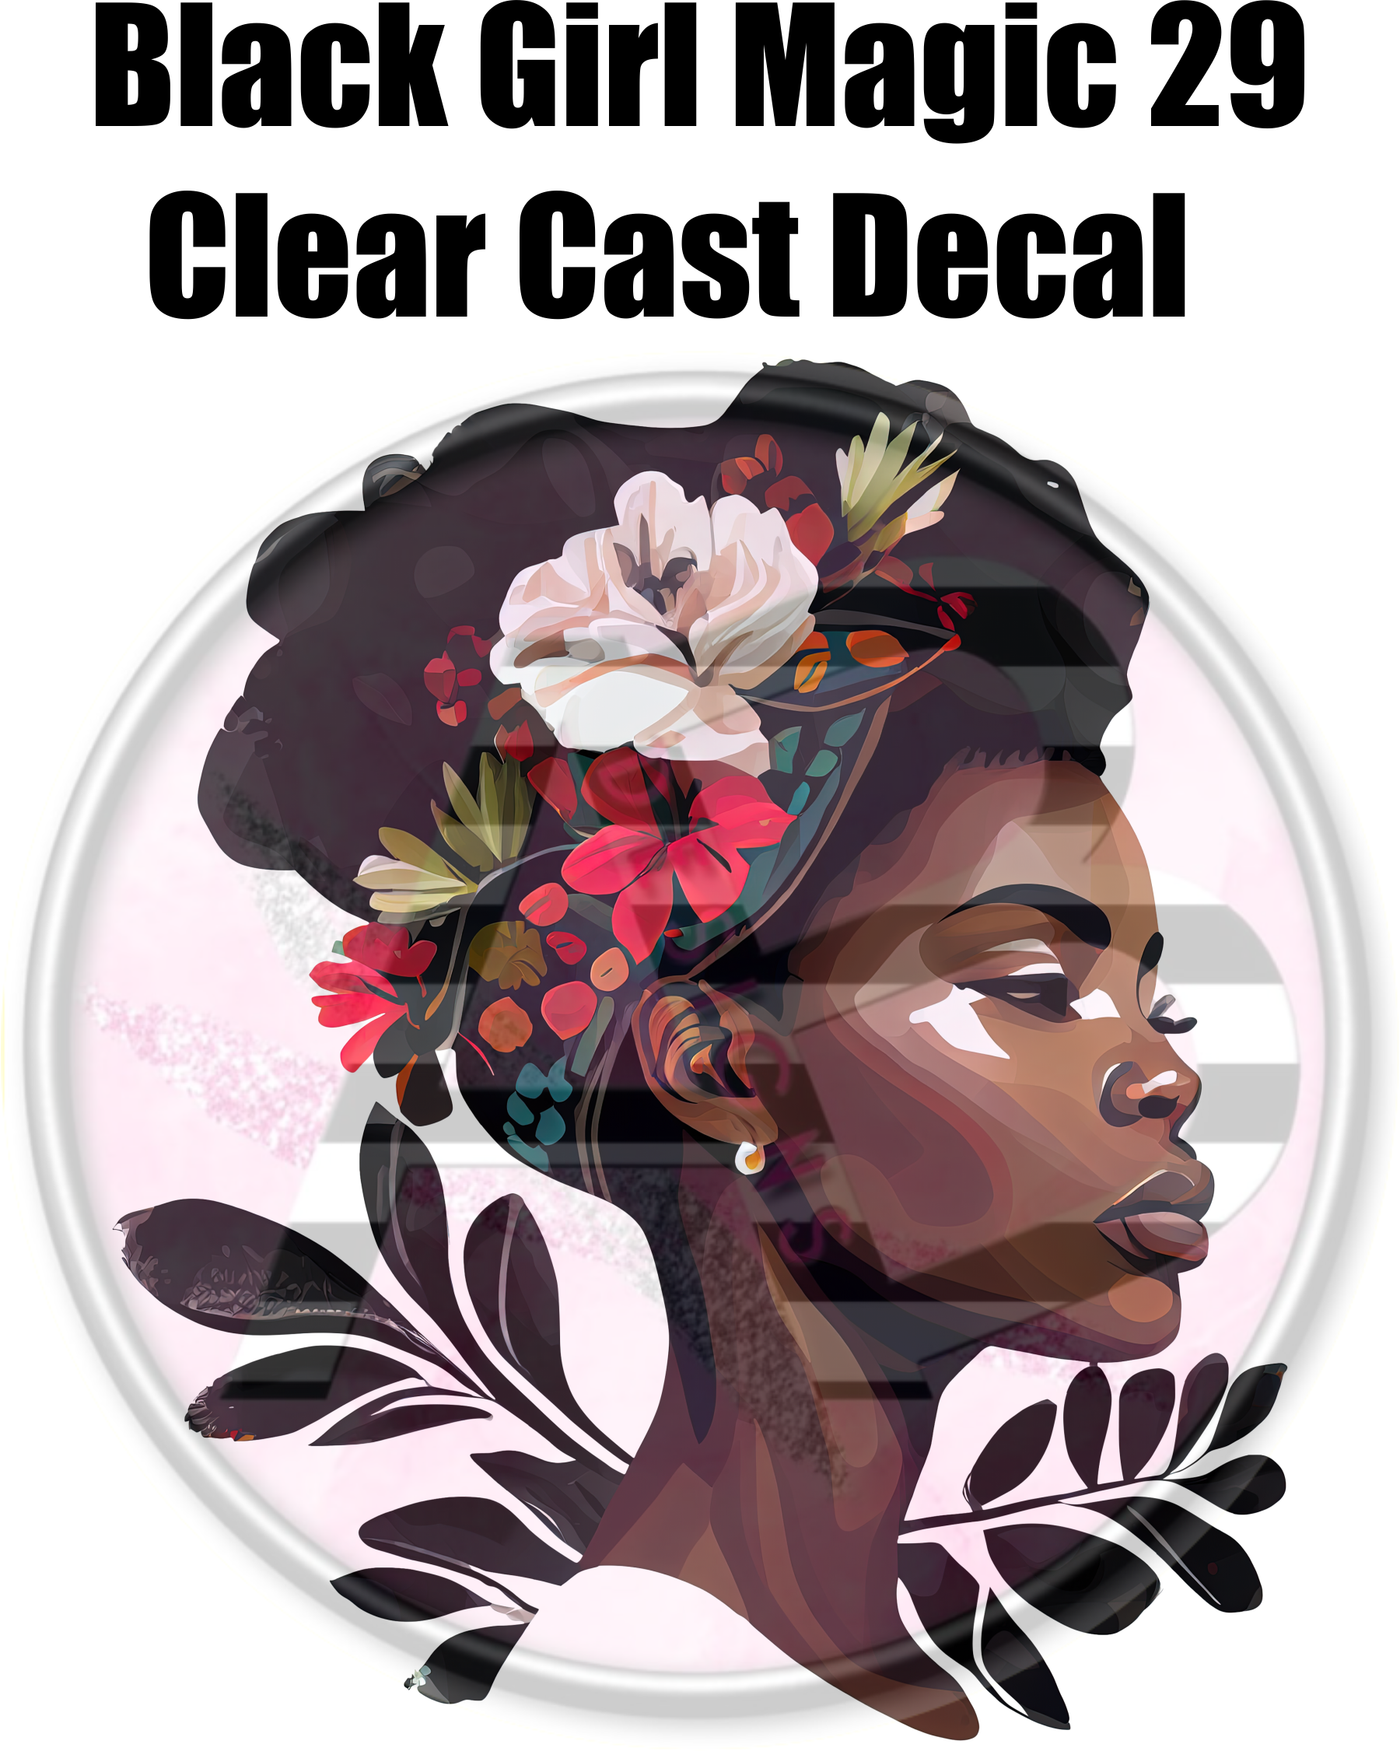 Black Girl Magic 29 - Clear Cast Decal